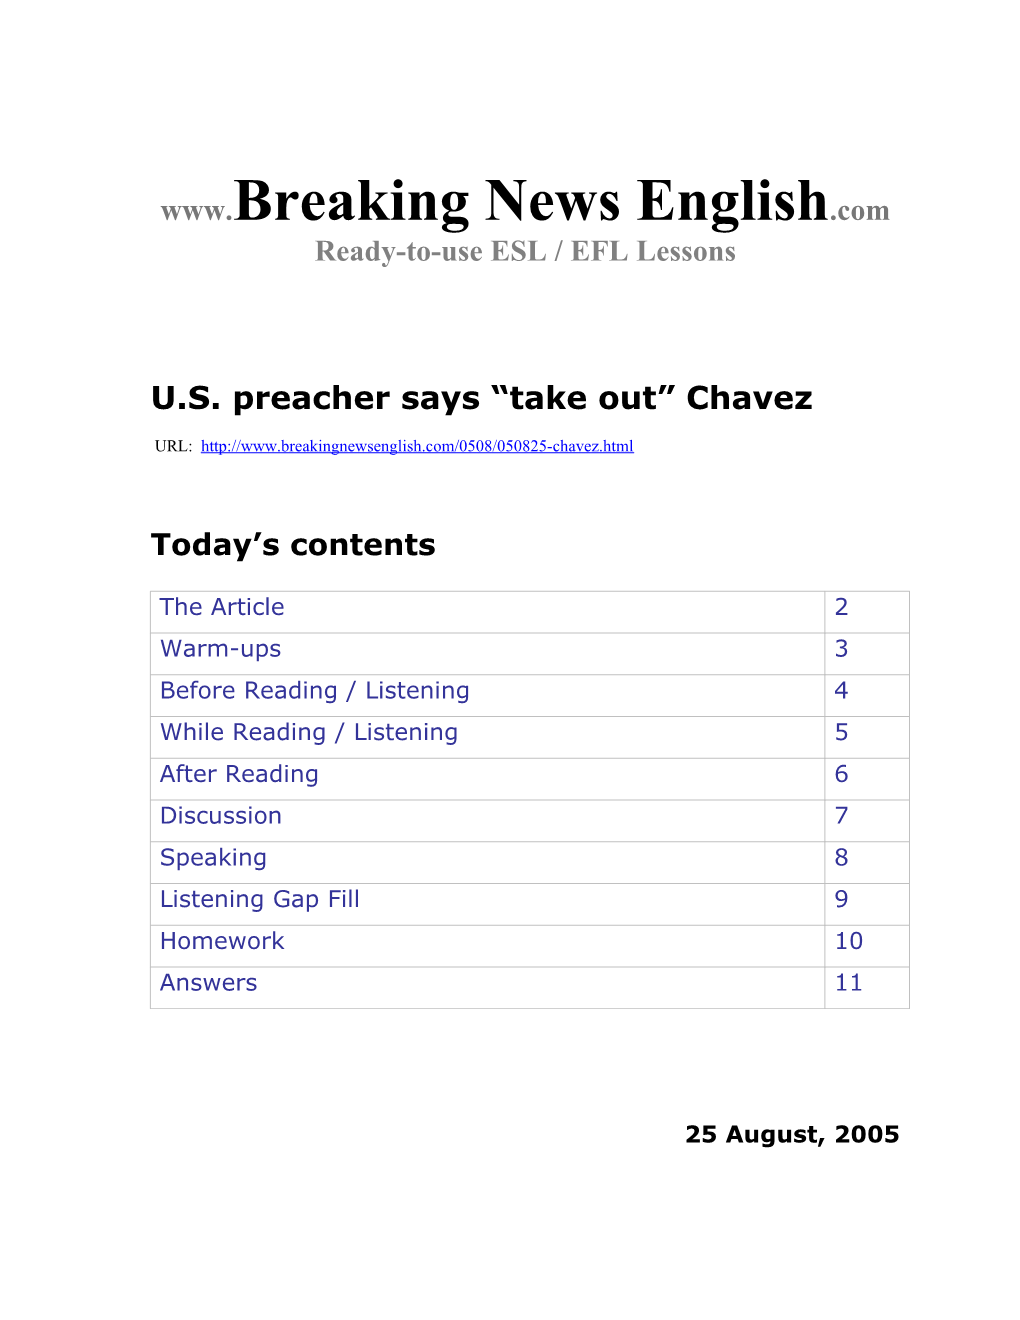 U.S. Preacher Says Take out Chavez